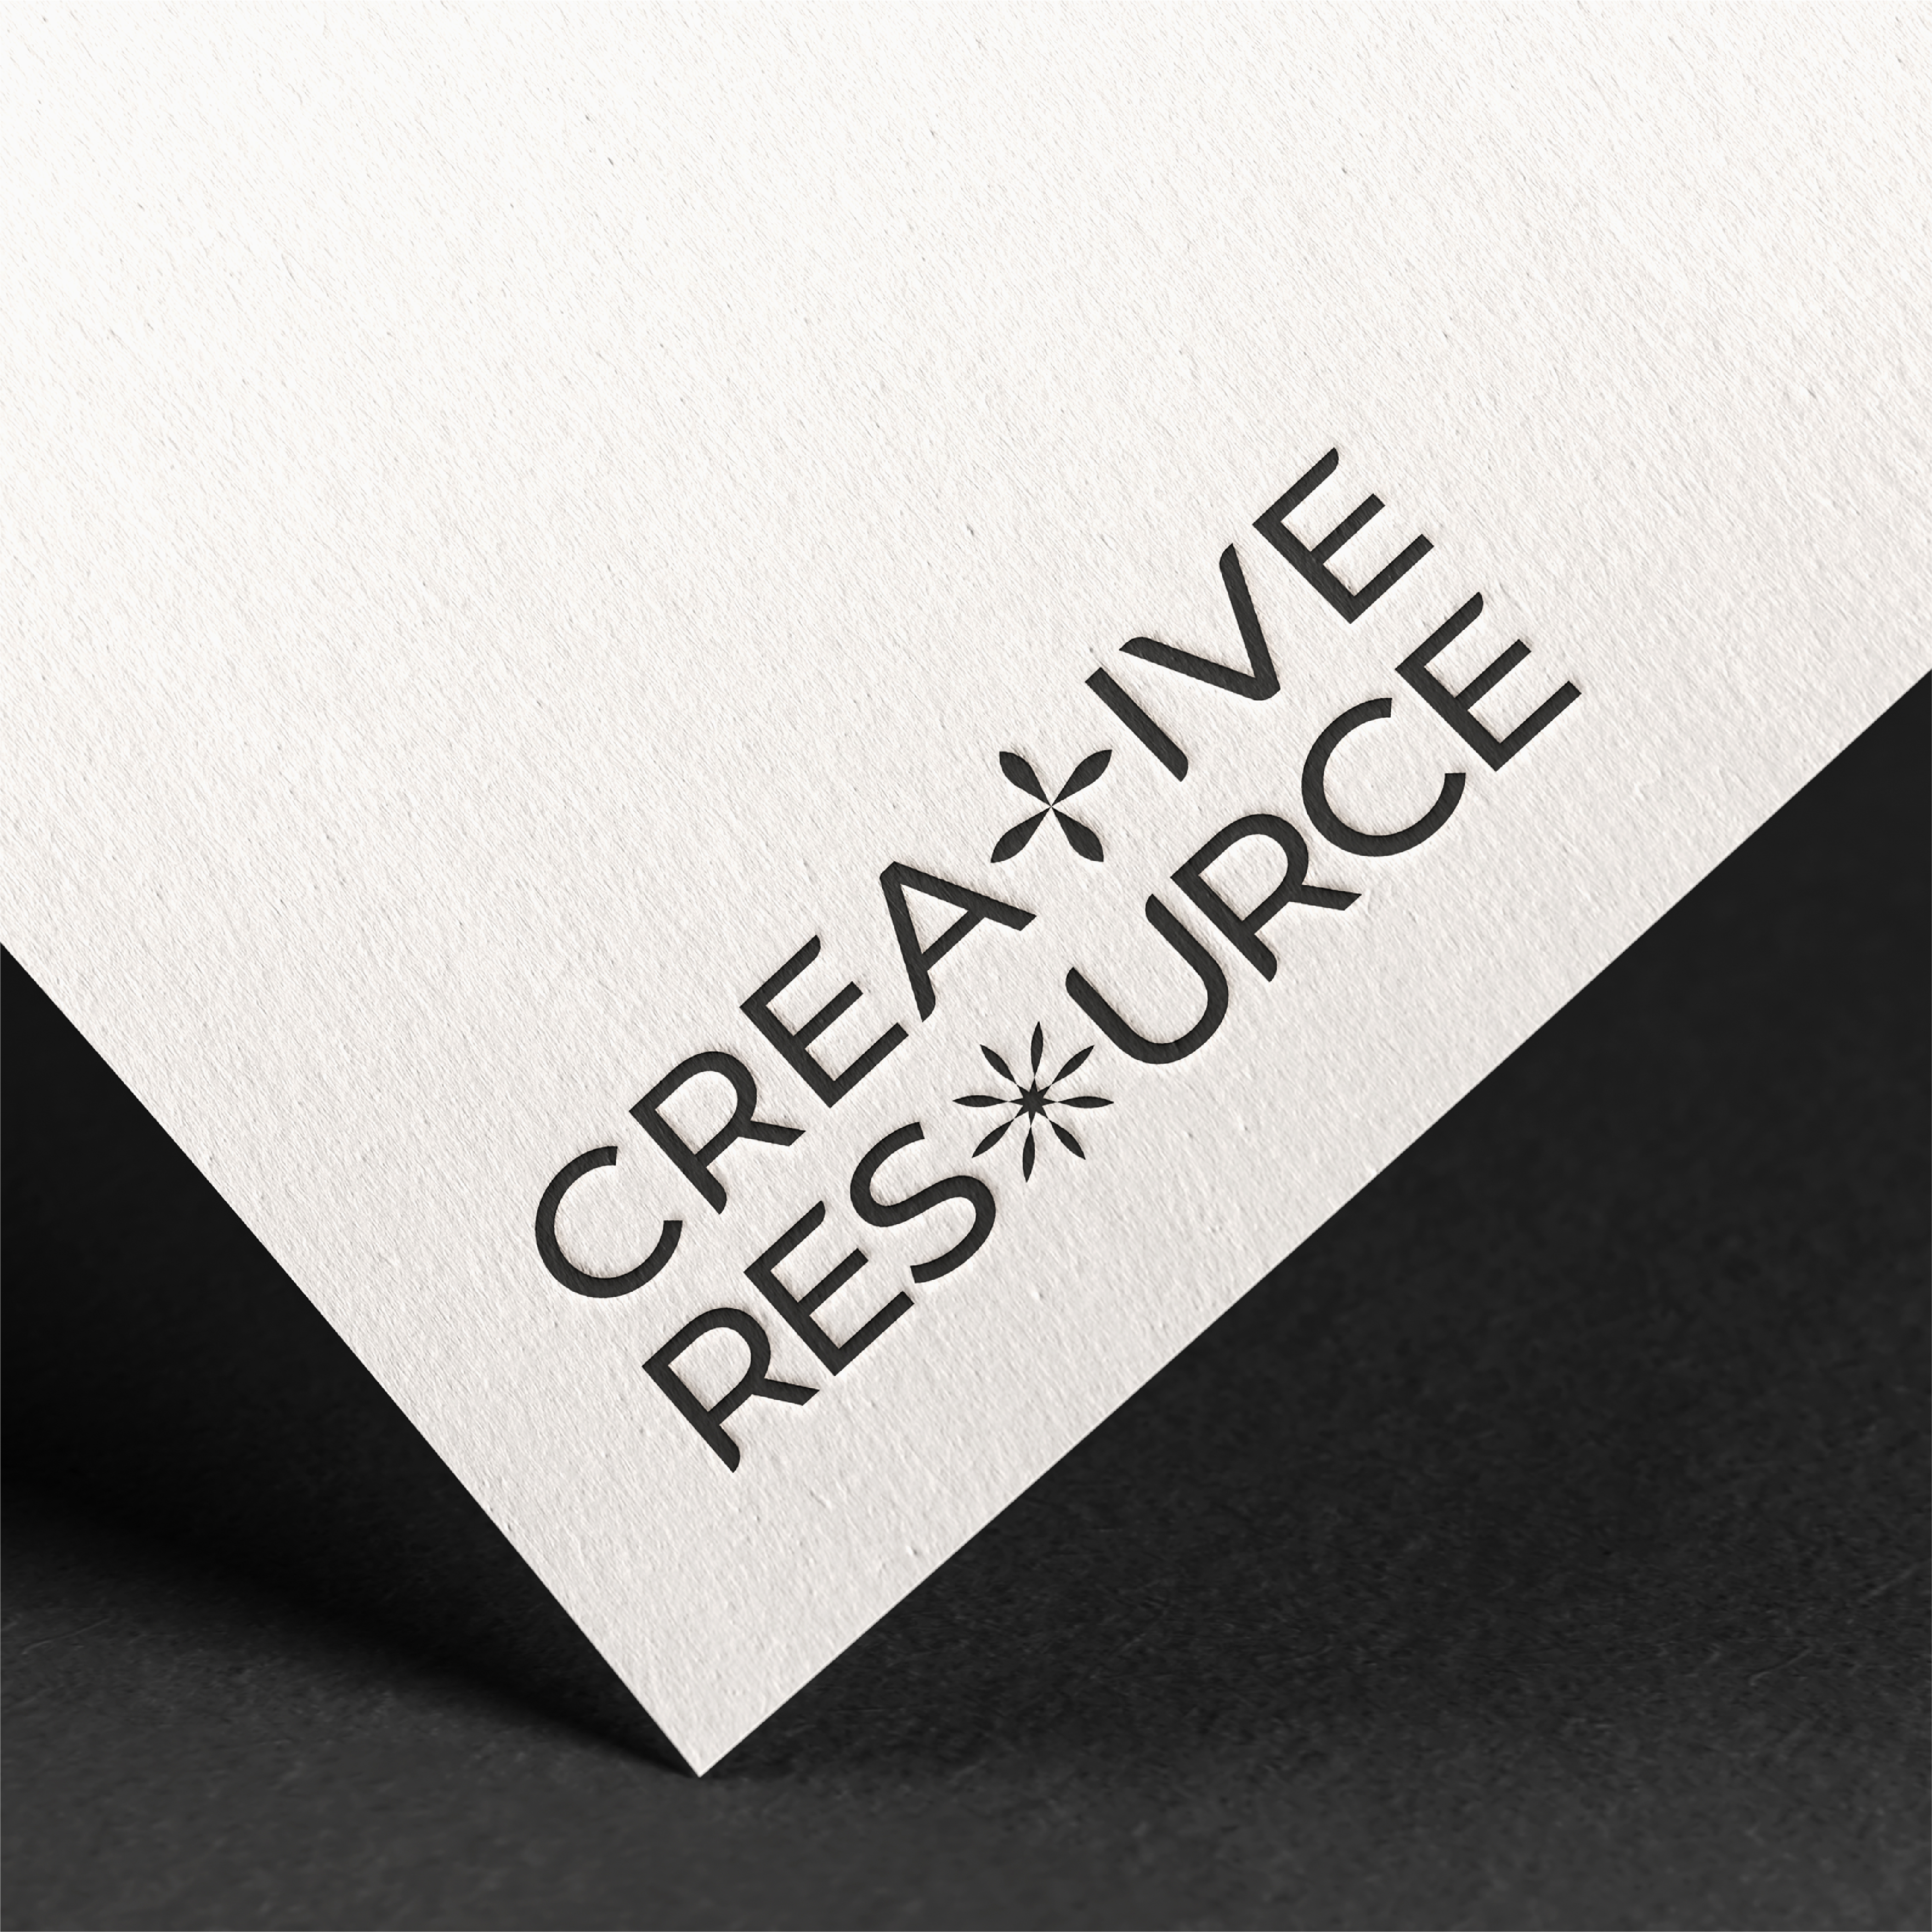 Creative Resource